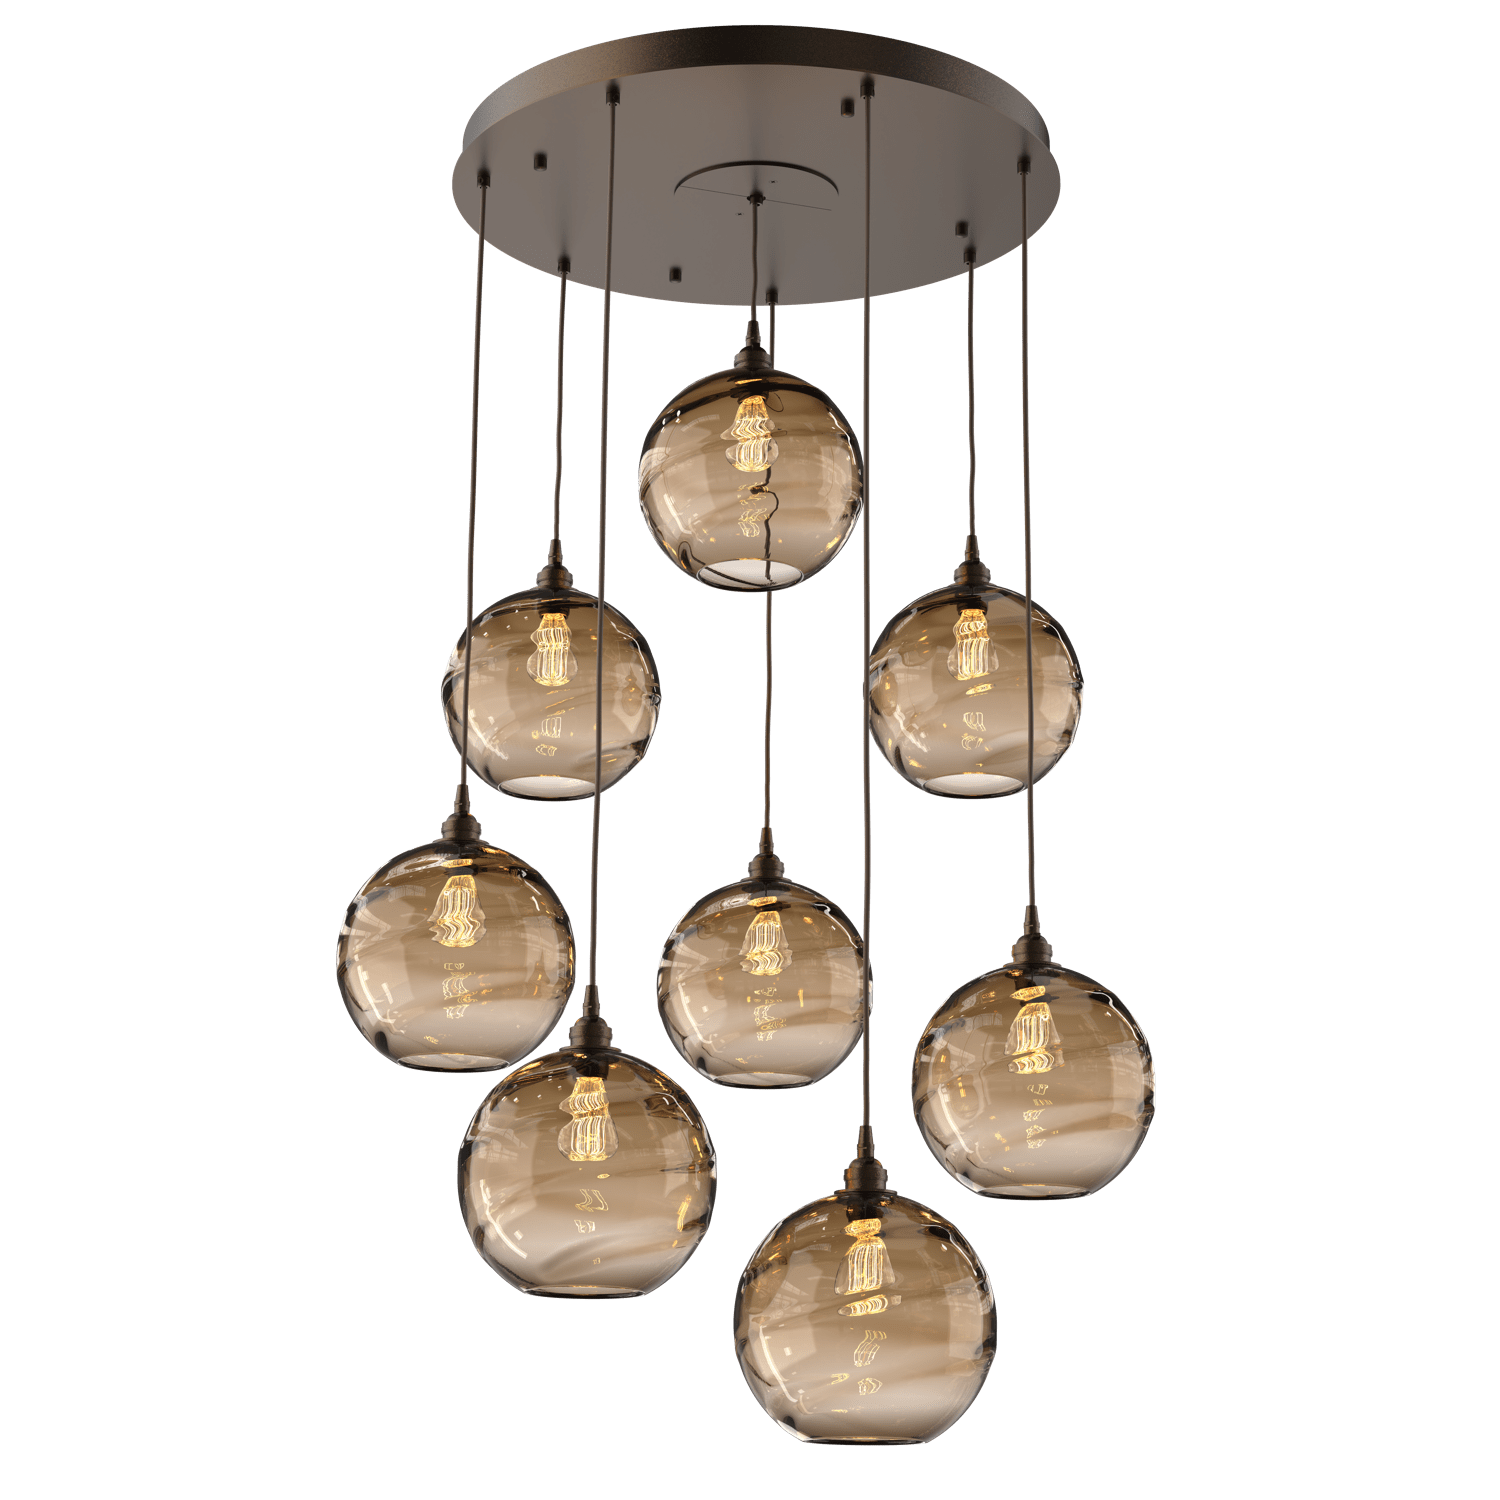 CHB0047-08-FB-OB-Hammerton-Studio-Optic-Blown-Glass-Terra-8-light-round-pendant-chandelier-with-flat-bronze-finish-and-optic-bronze-blown-glass-shades-and-incandescent-lamping